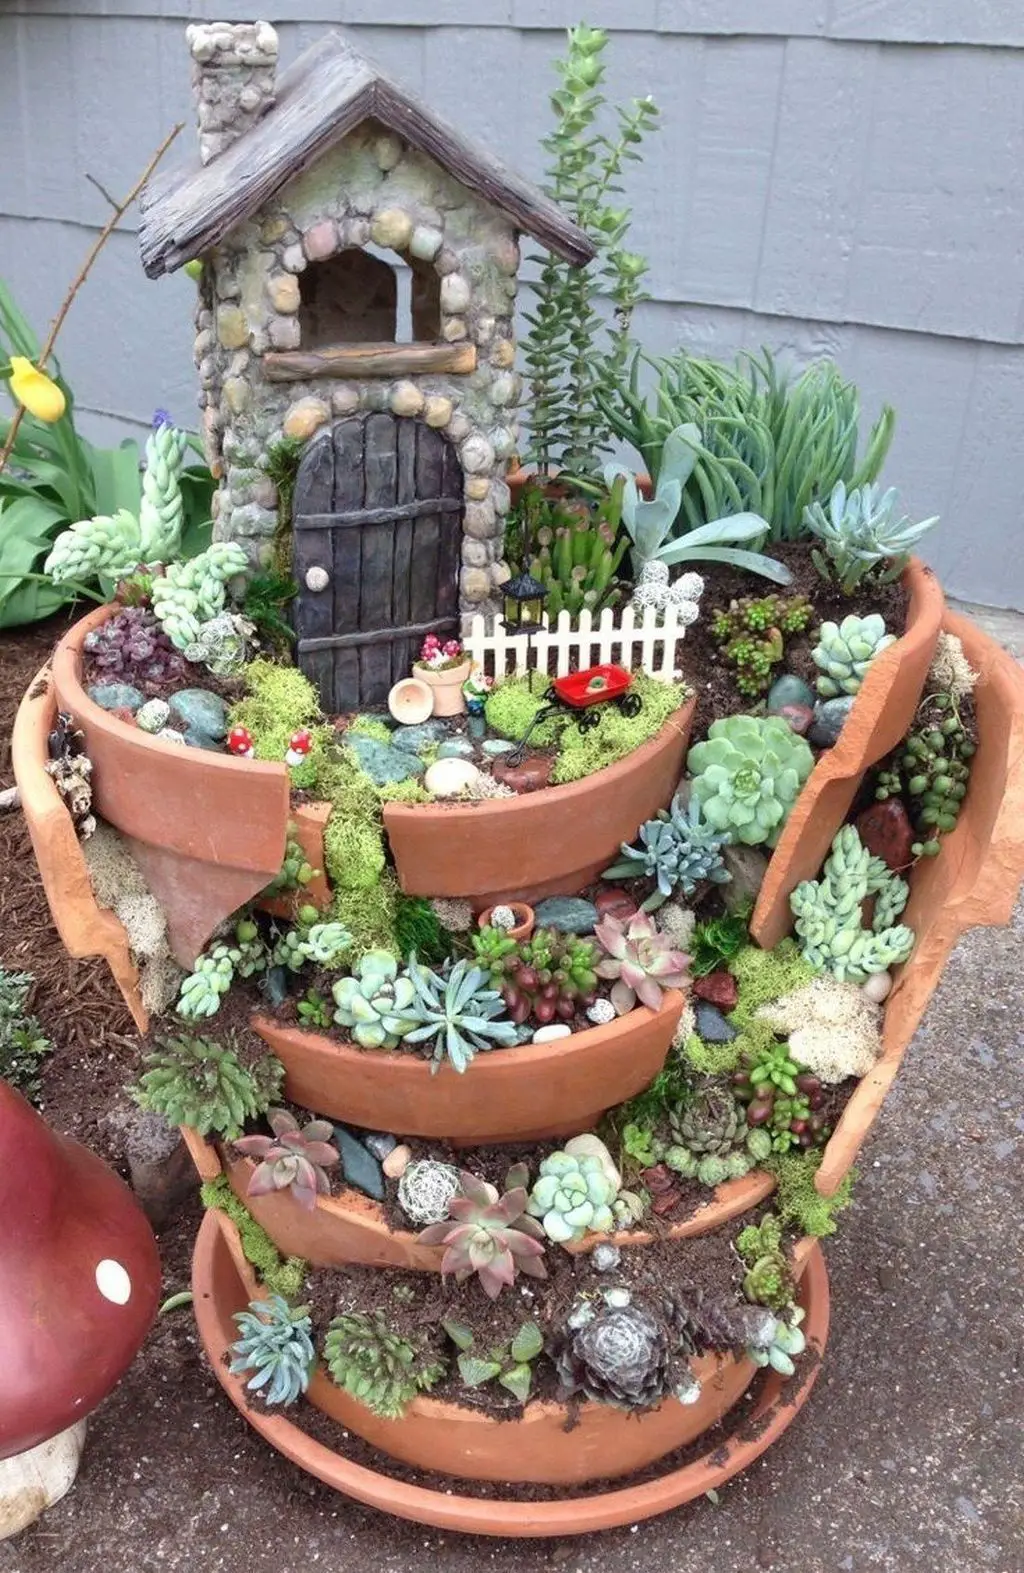 Discover 8 Captivating Diy Ideas To Create New Enchanting Miniature Fairy Gardens.